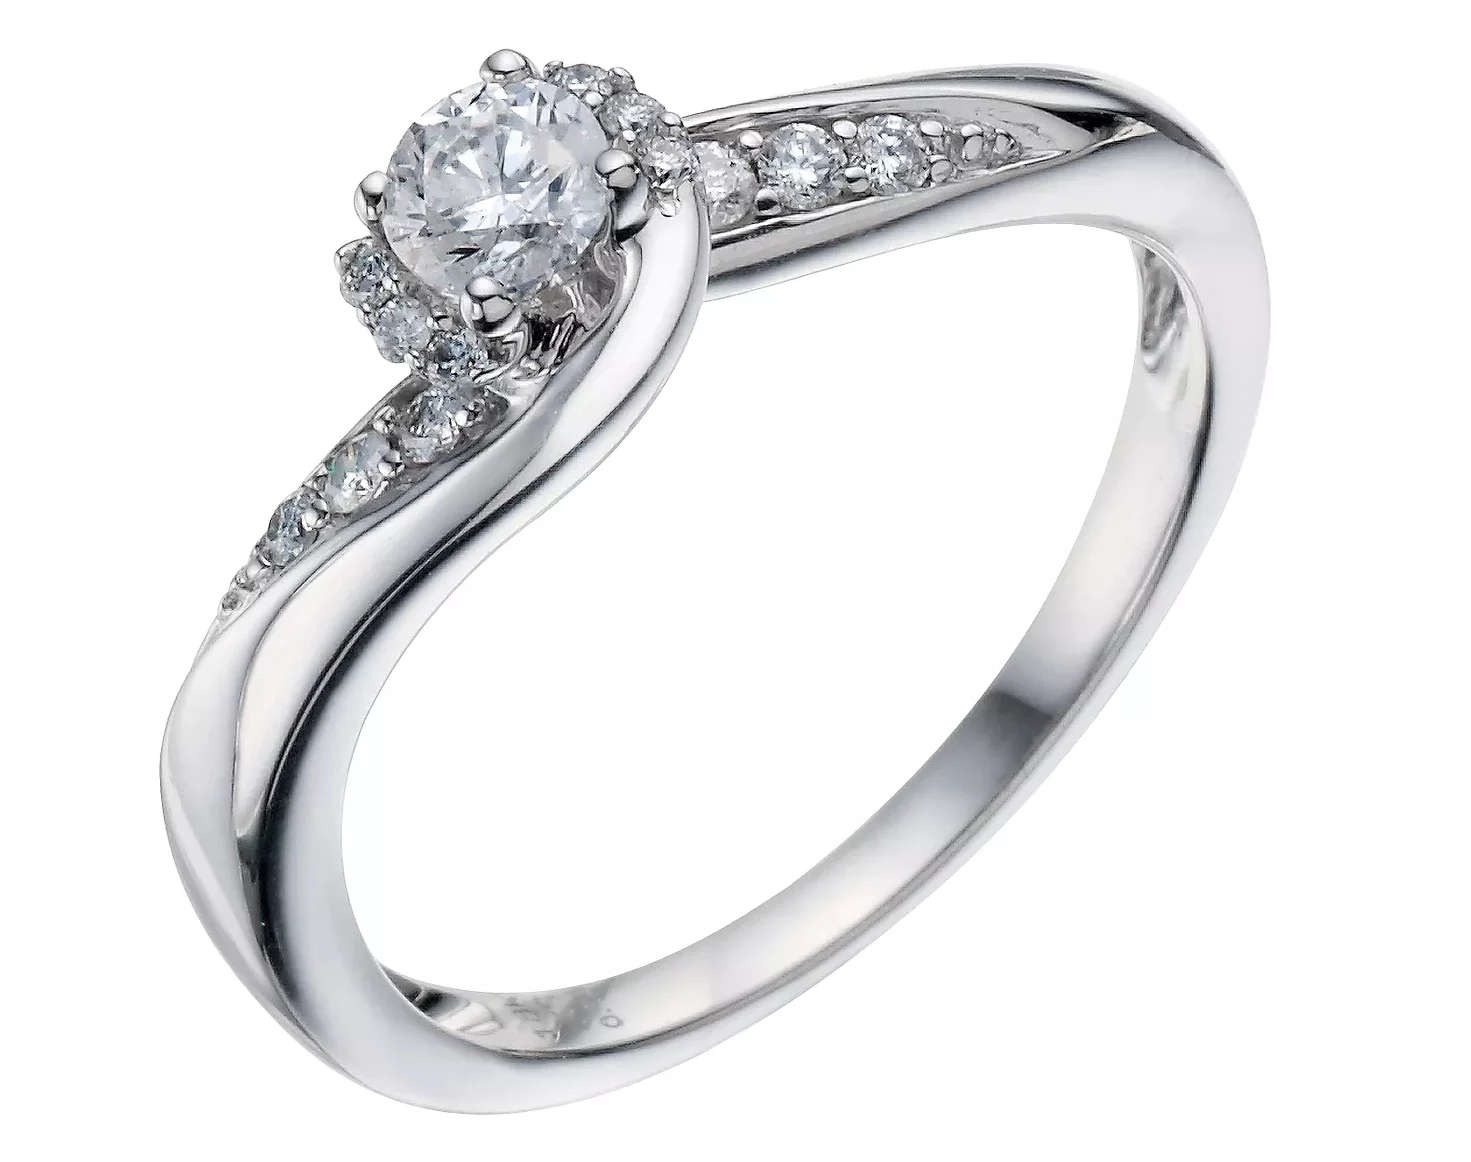 A H. Samuel engagement ring